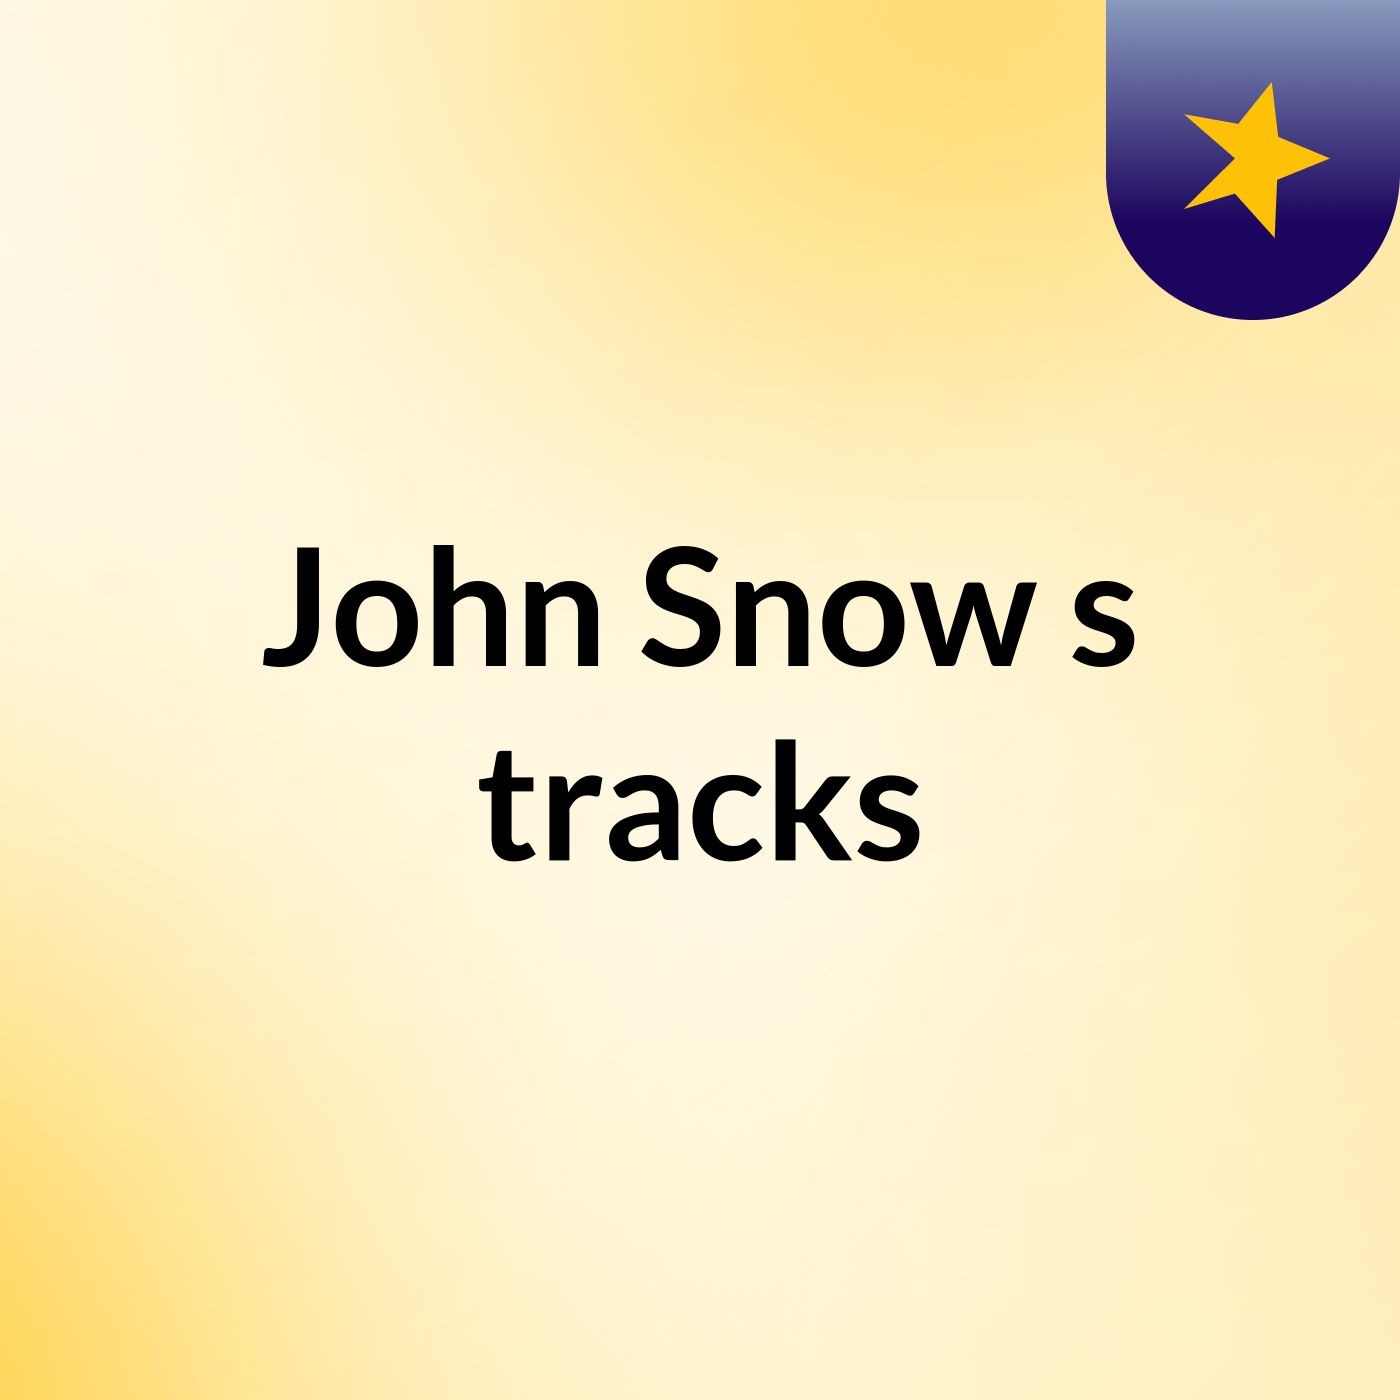 John Snow's tracks